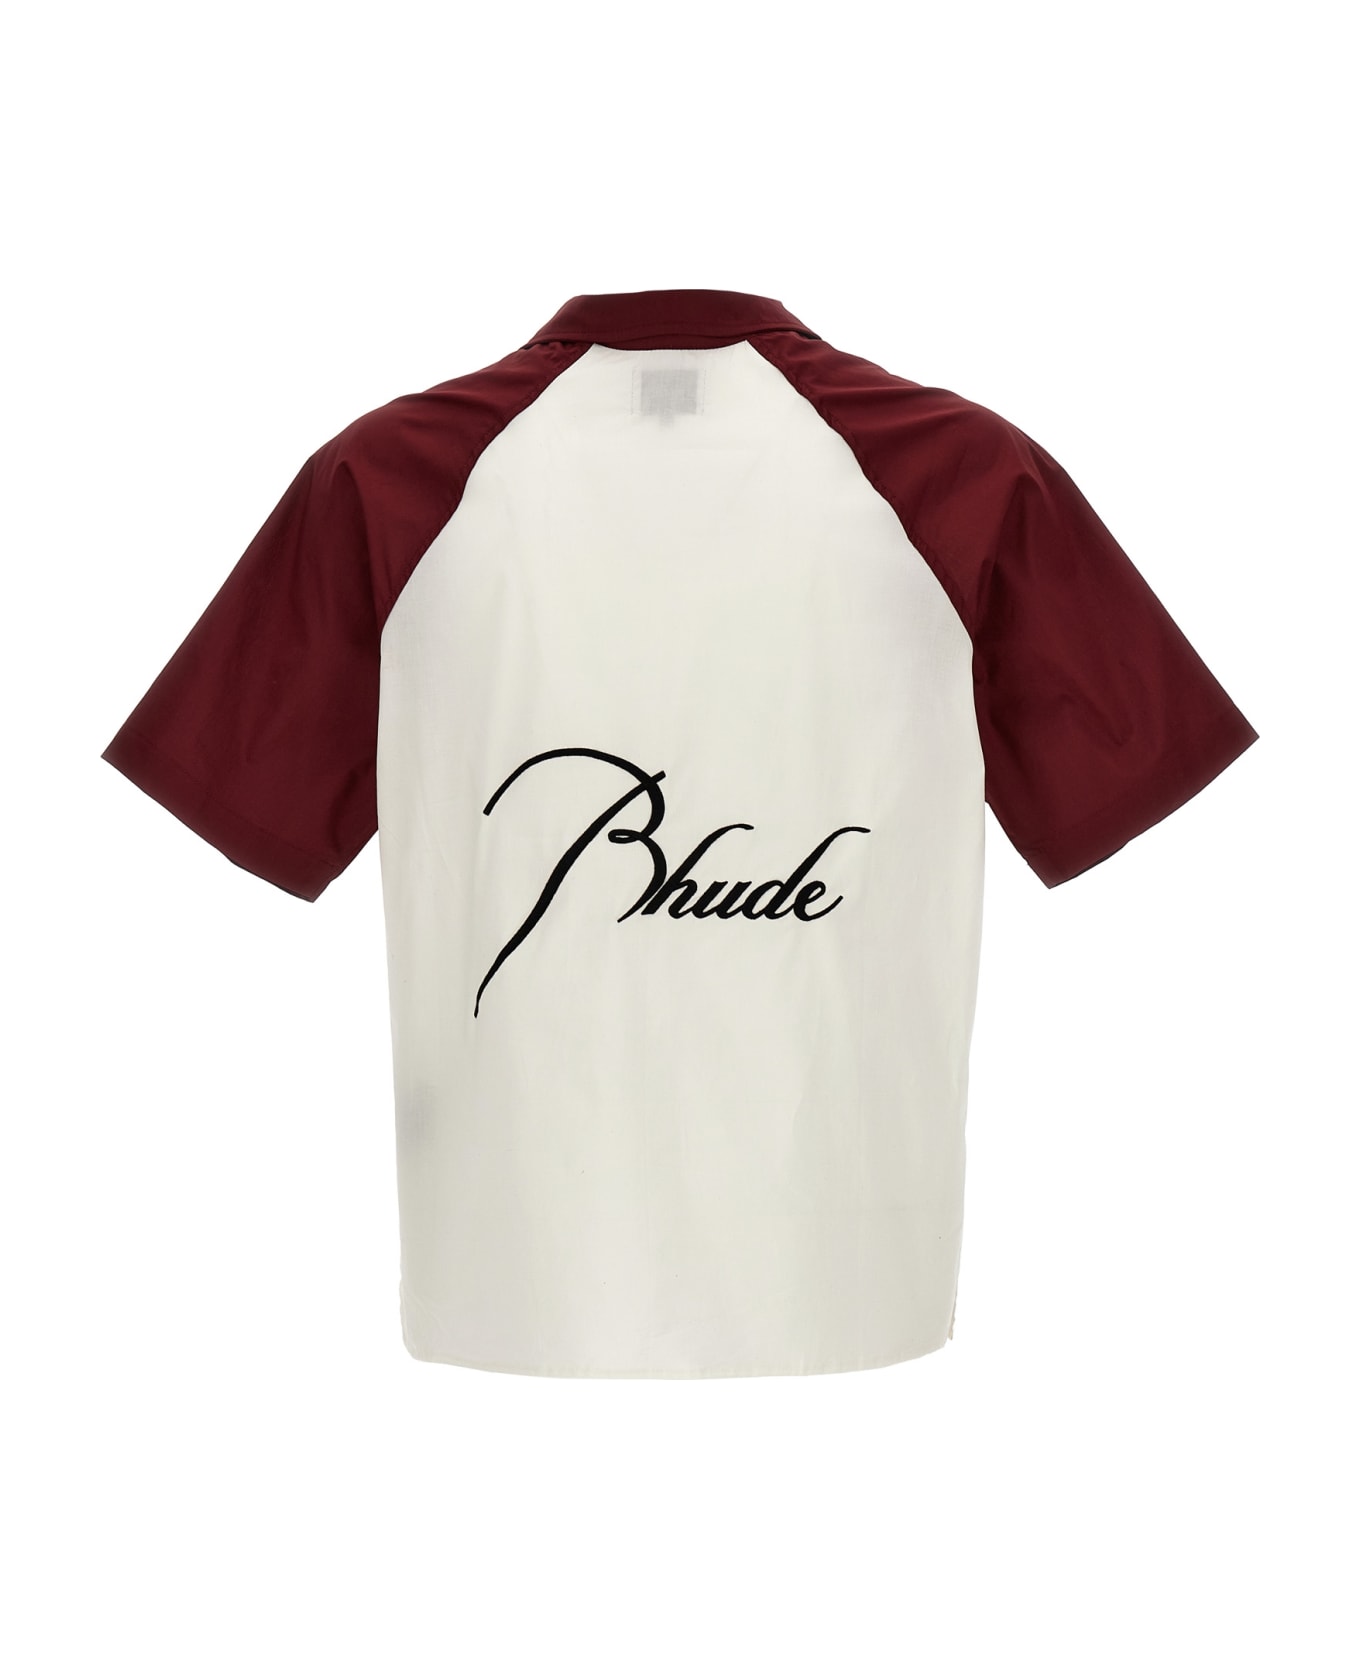 Rhude Logo Embroidery Shirt - Maroon/creme